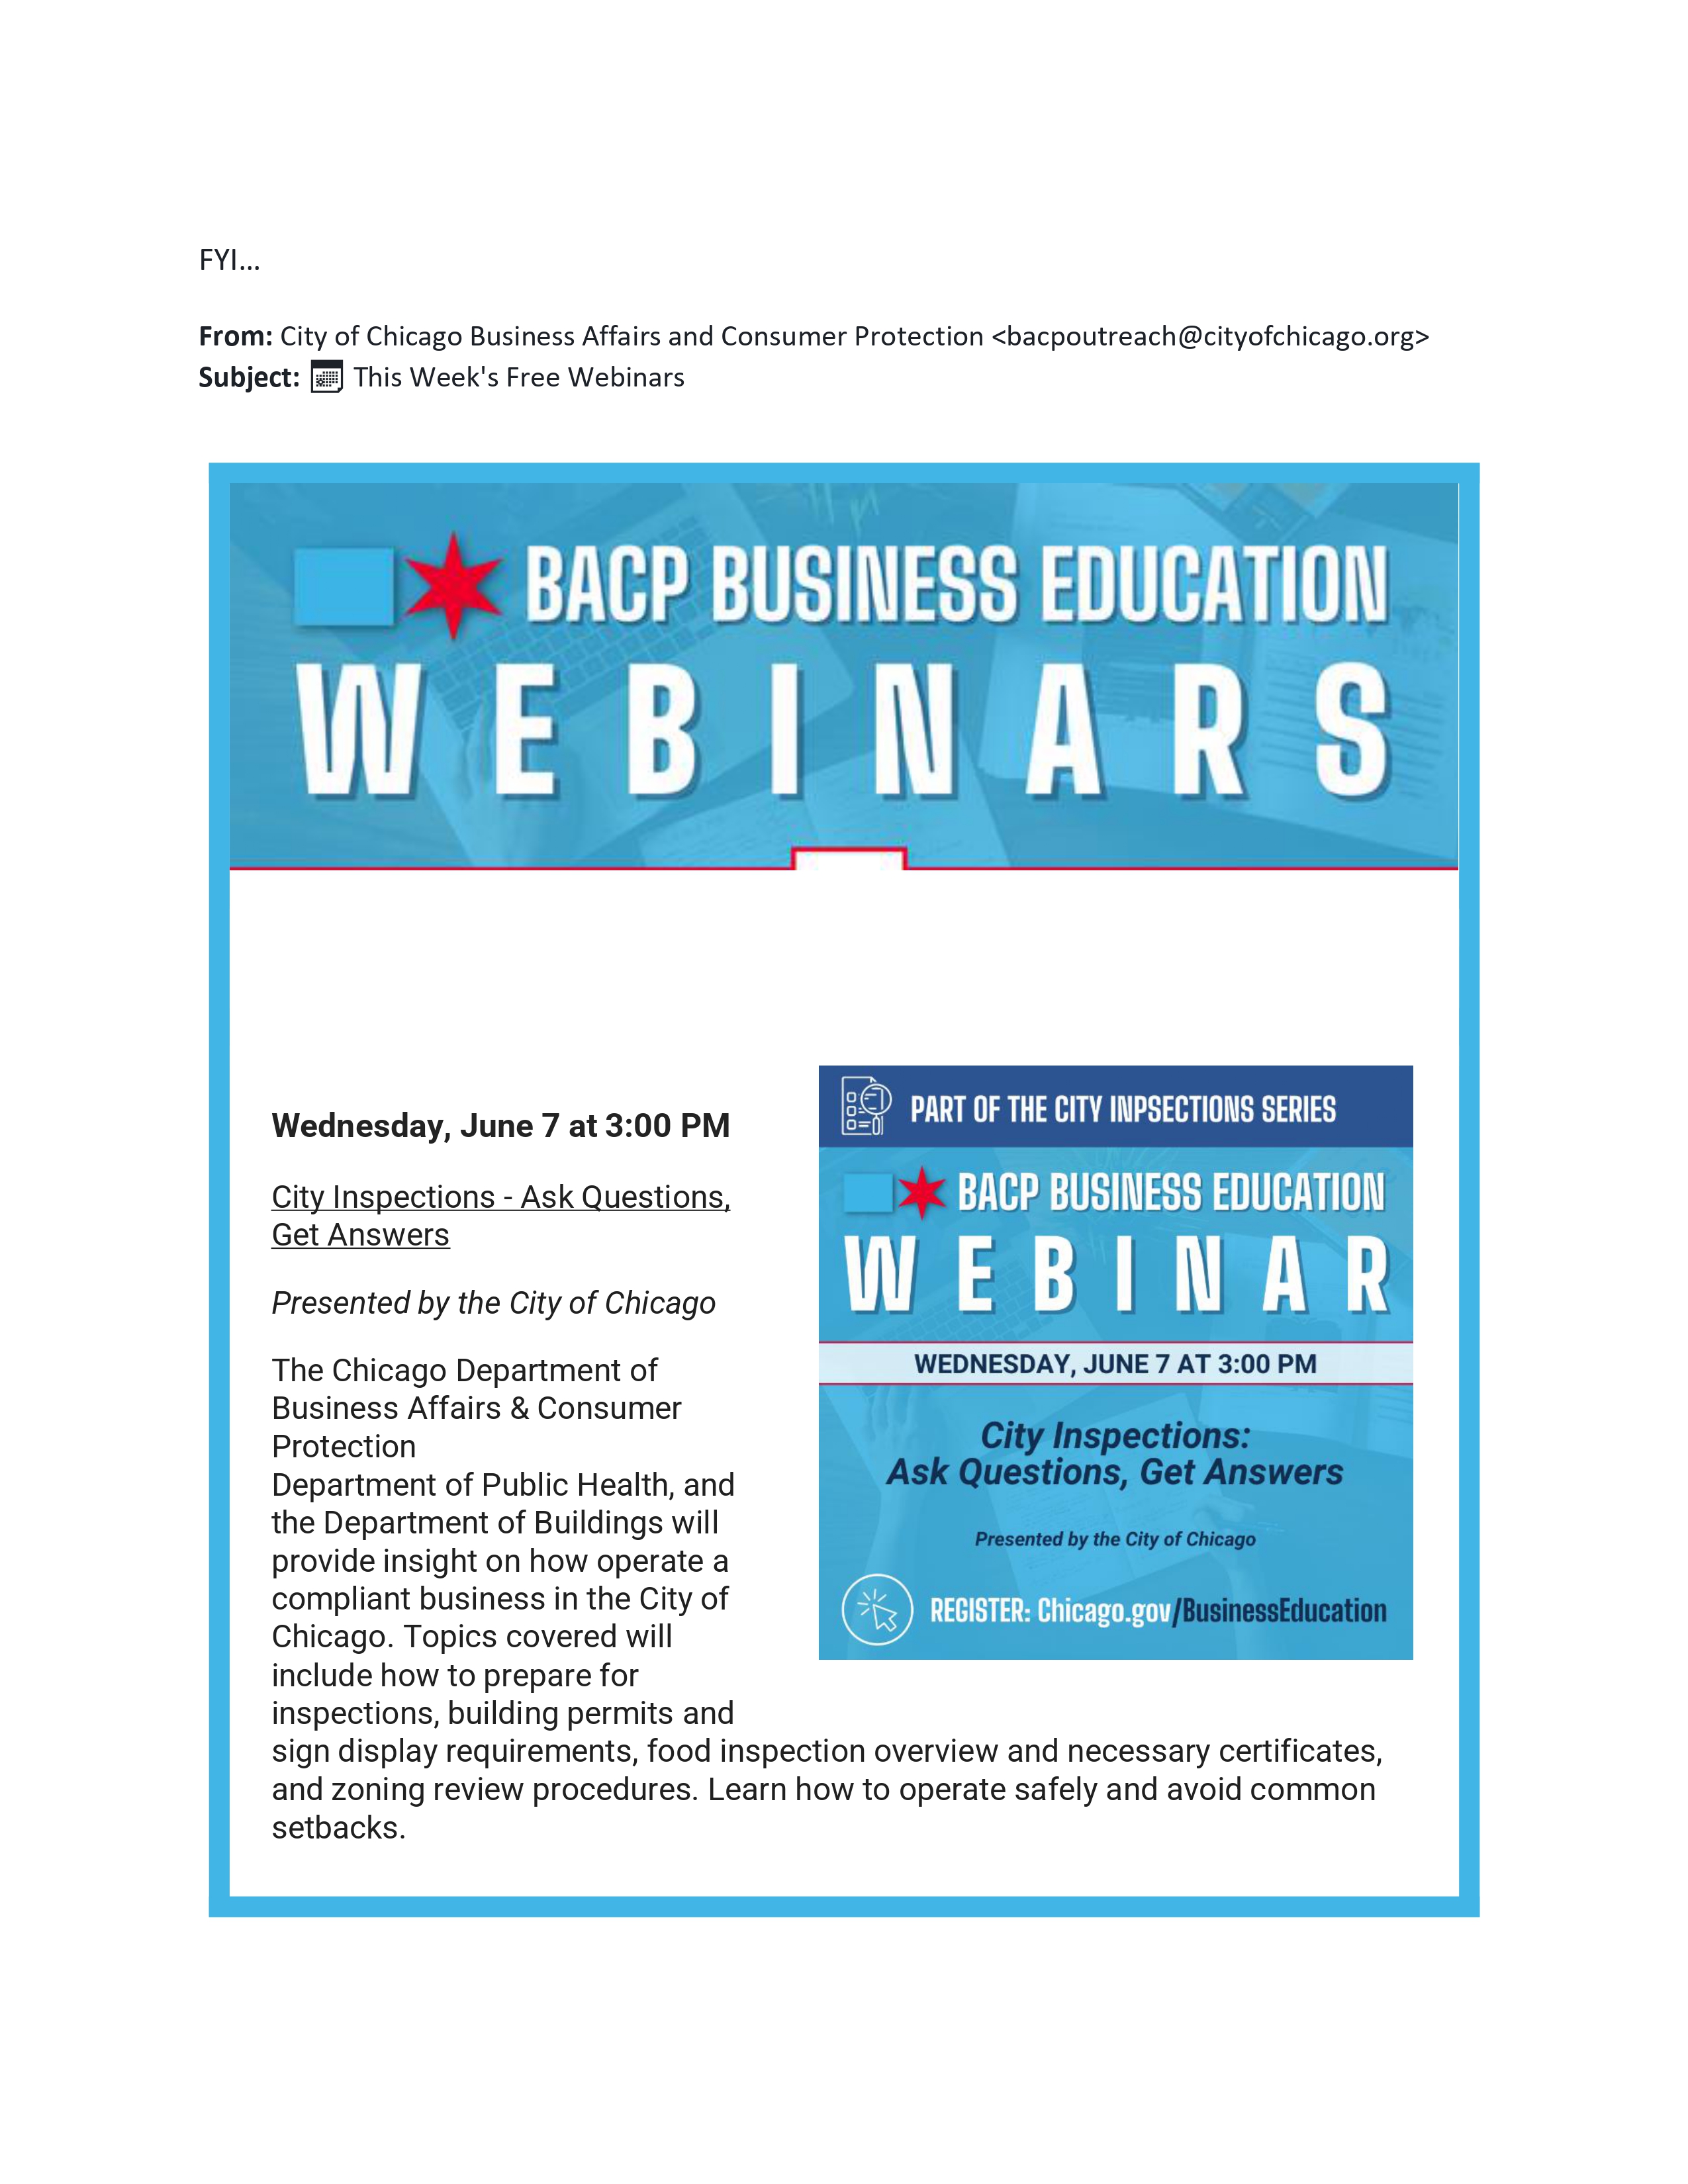 This weeks free BACP webinars